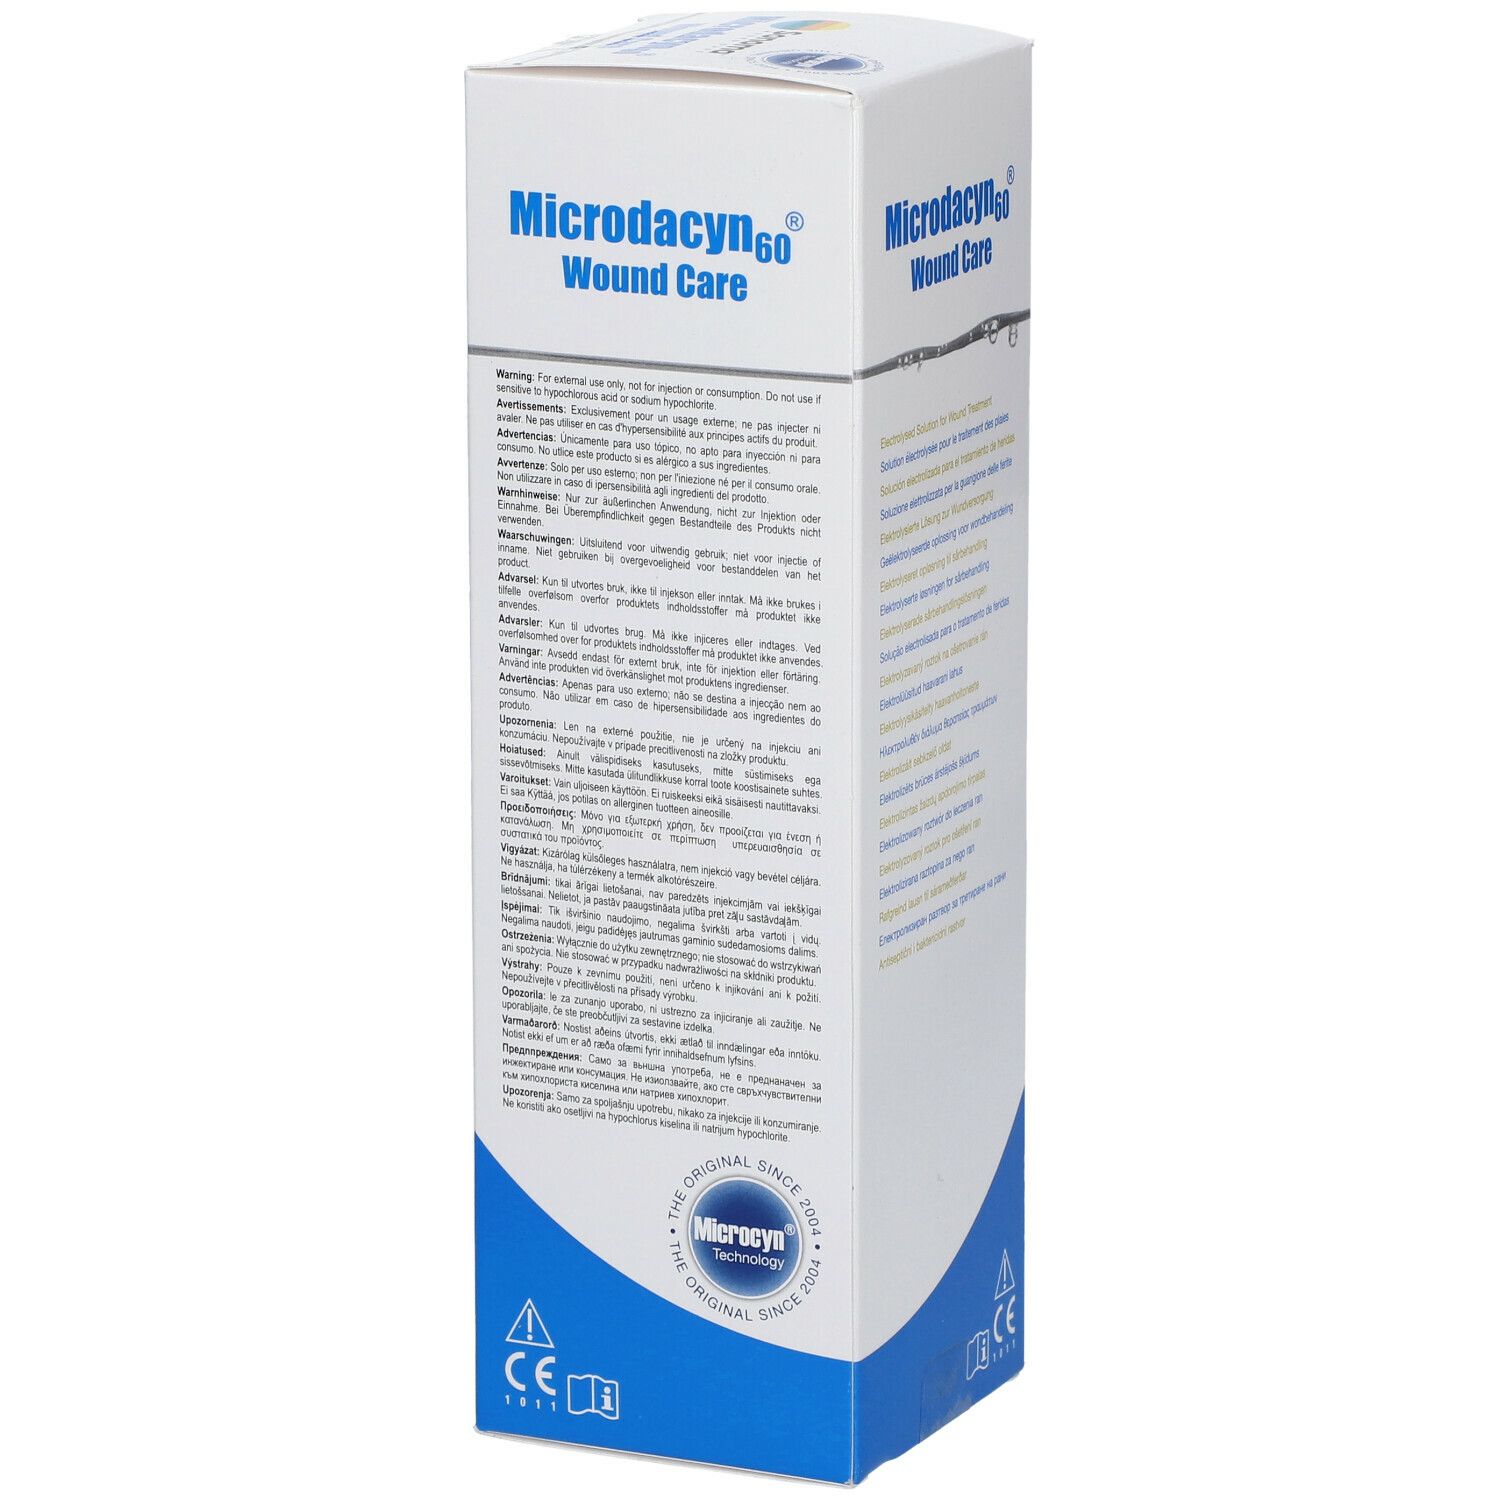 Microdacyn 60® Wound Care